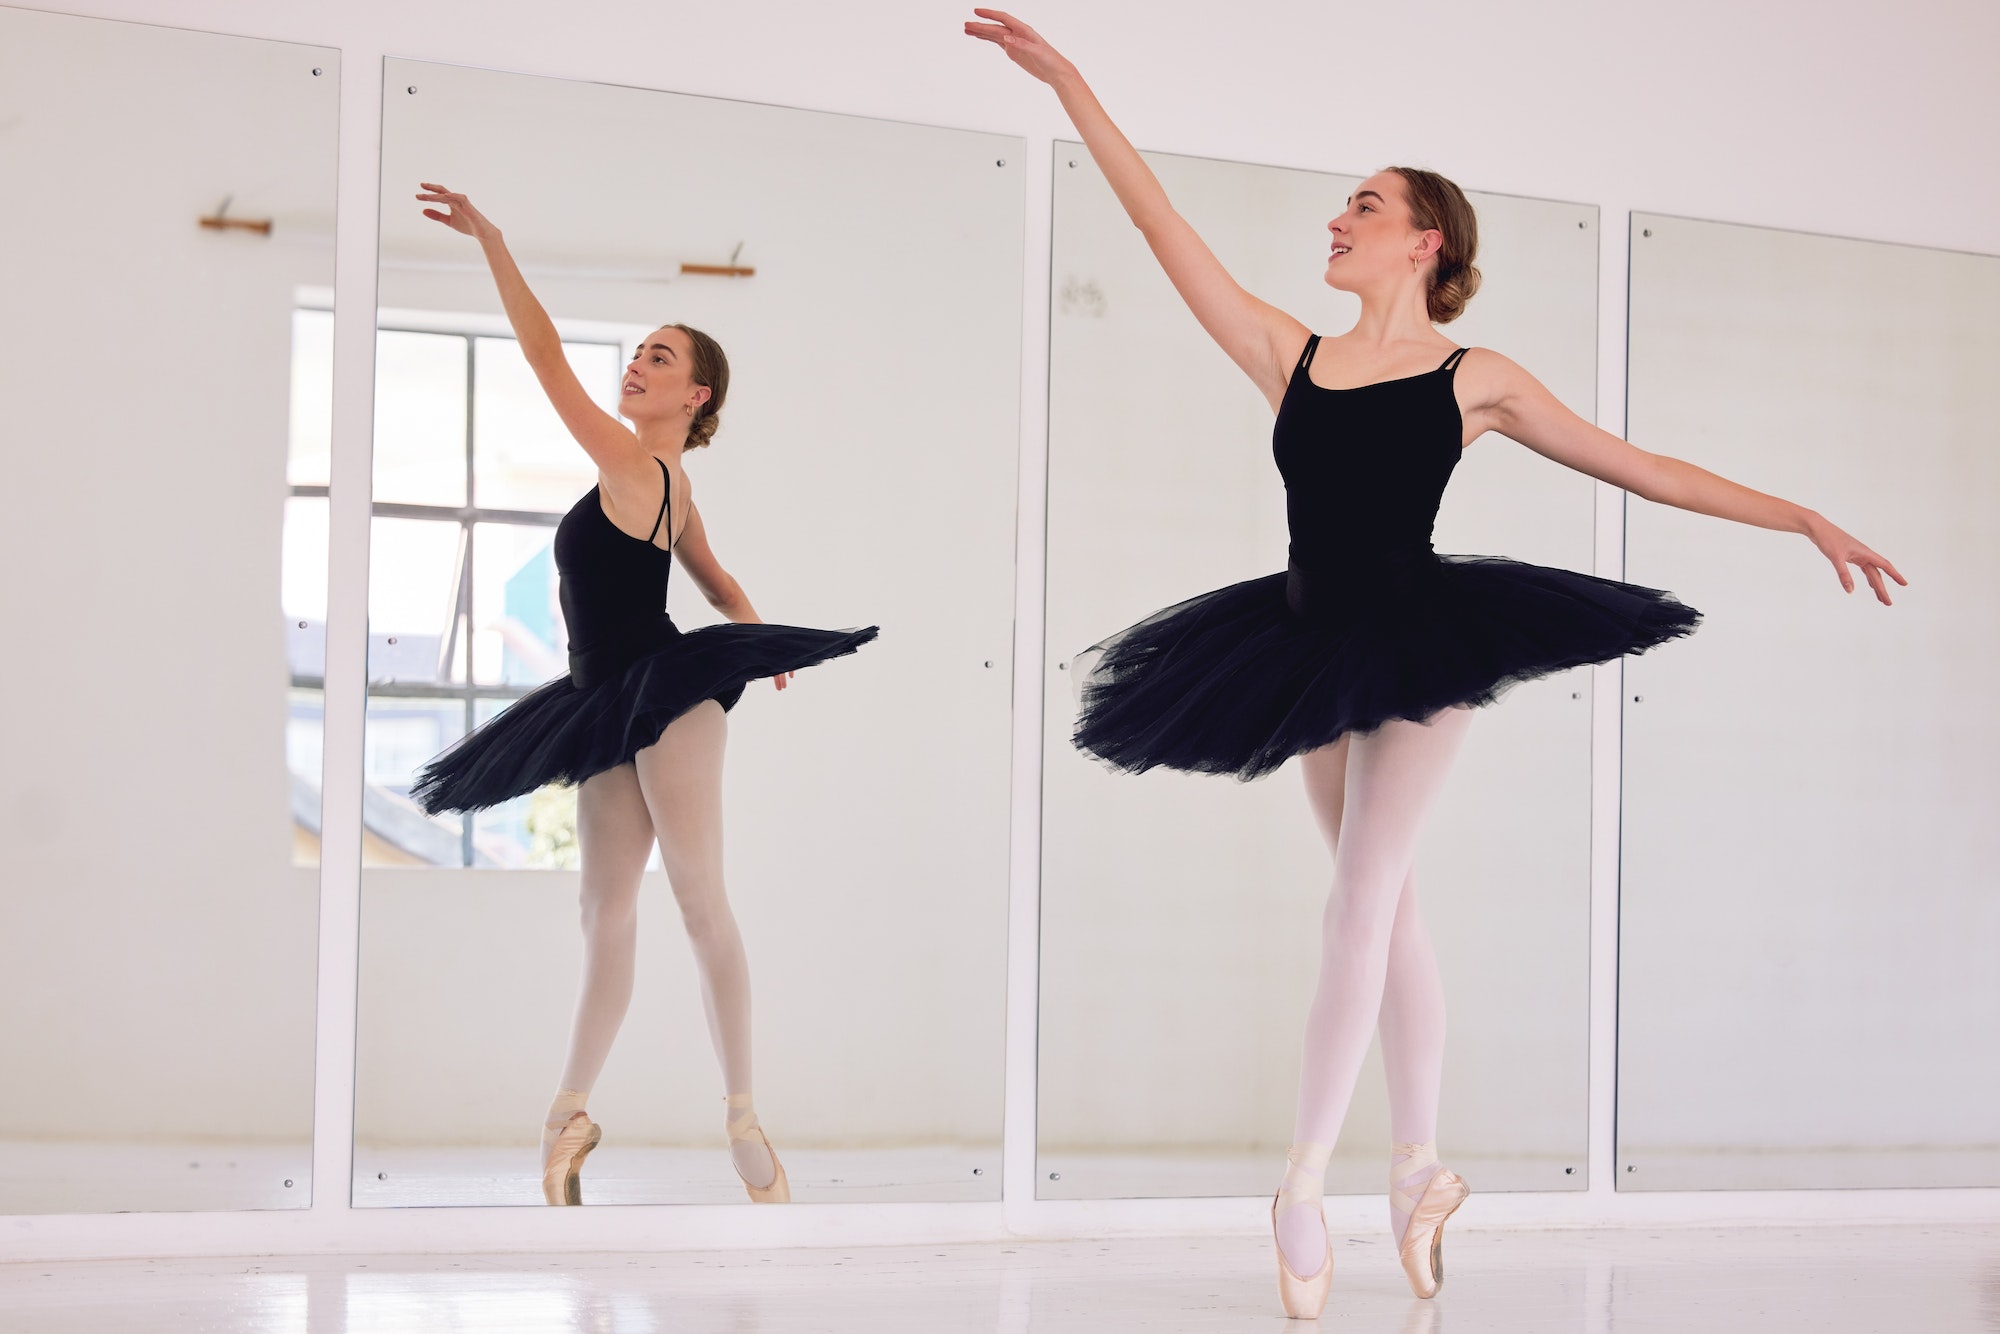 Ballet dancer or ballerina in dance studio practice or training for dancing performance or competit